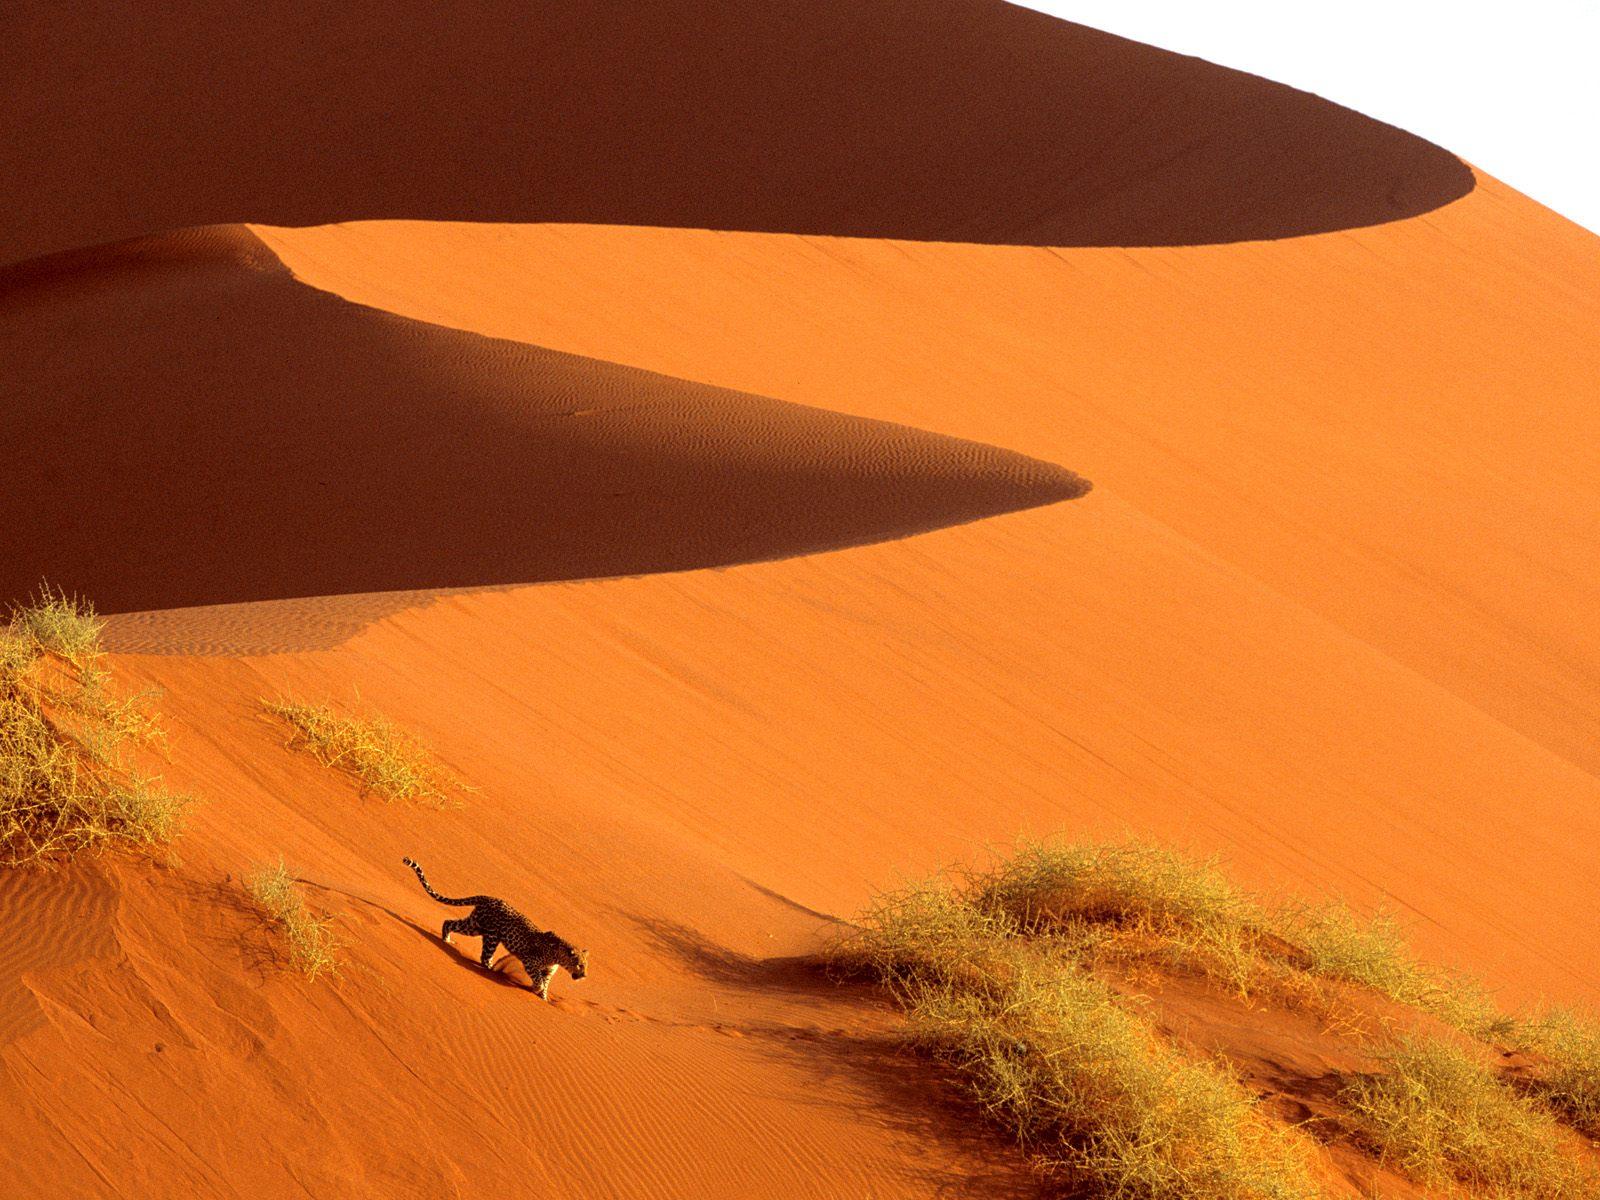 Crossing the Sand Dunes of Sossusvlei Park / Namibia / Africa